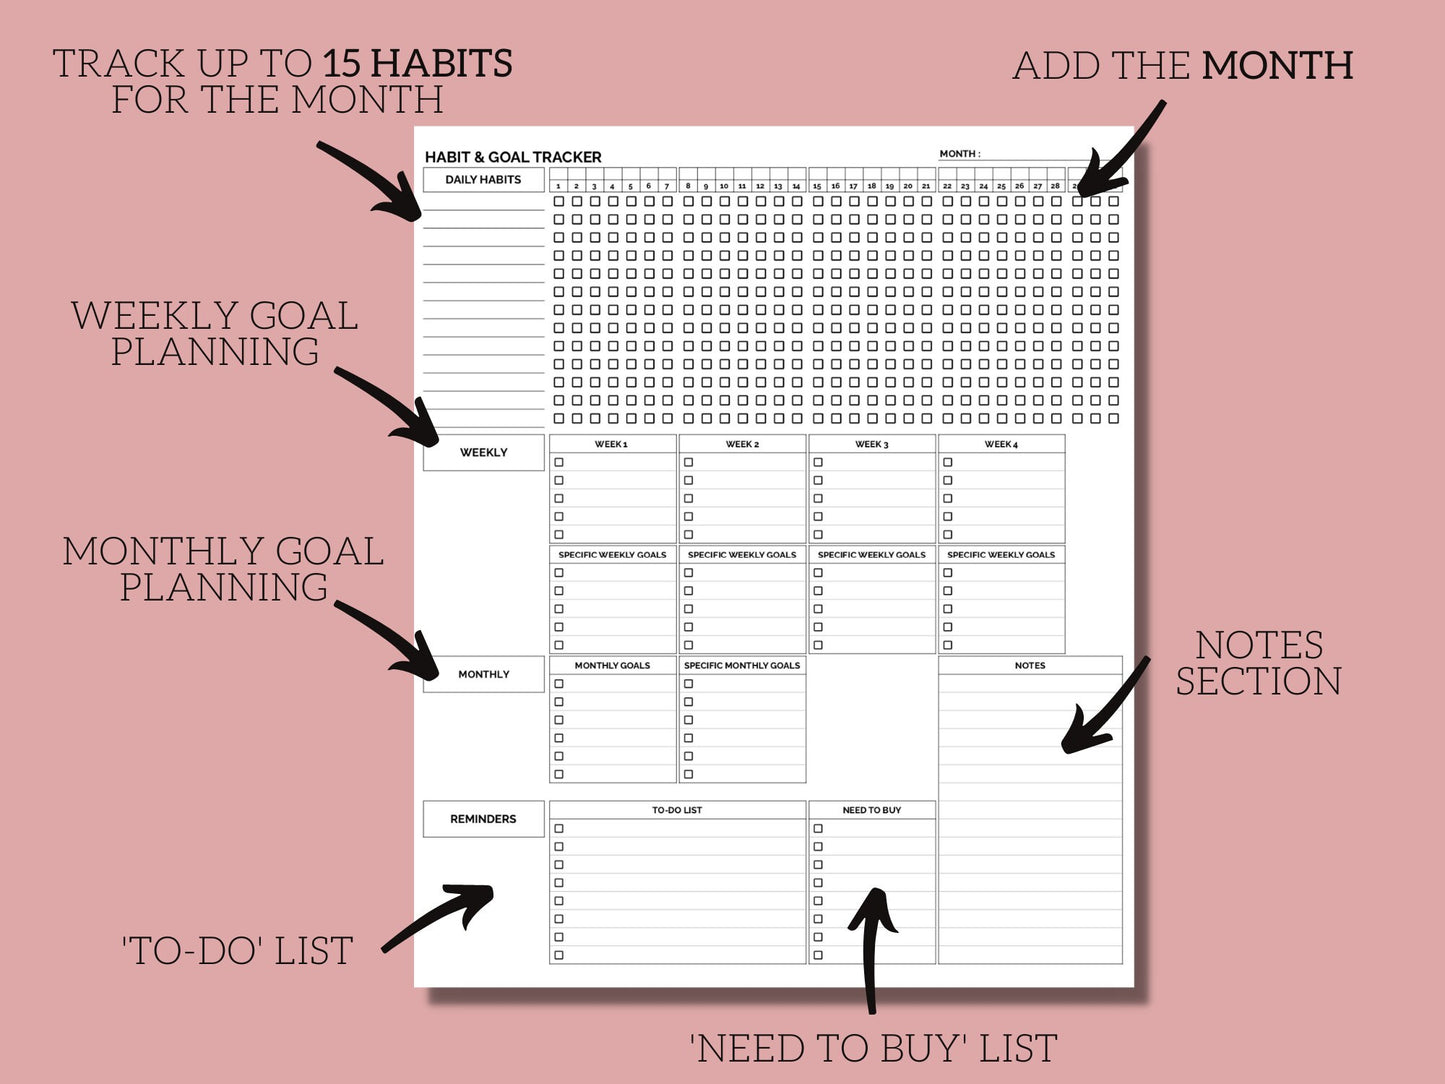 Habit Tracker & Goal Planning | Printable